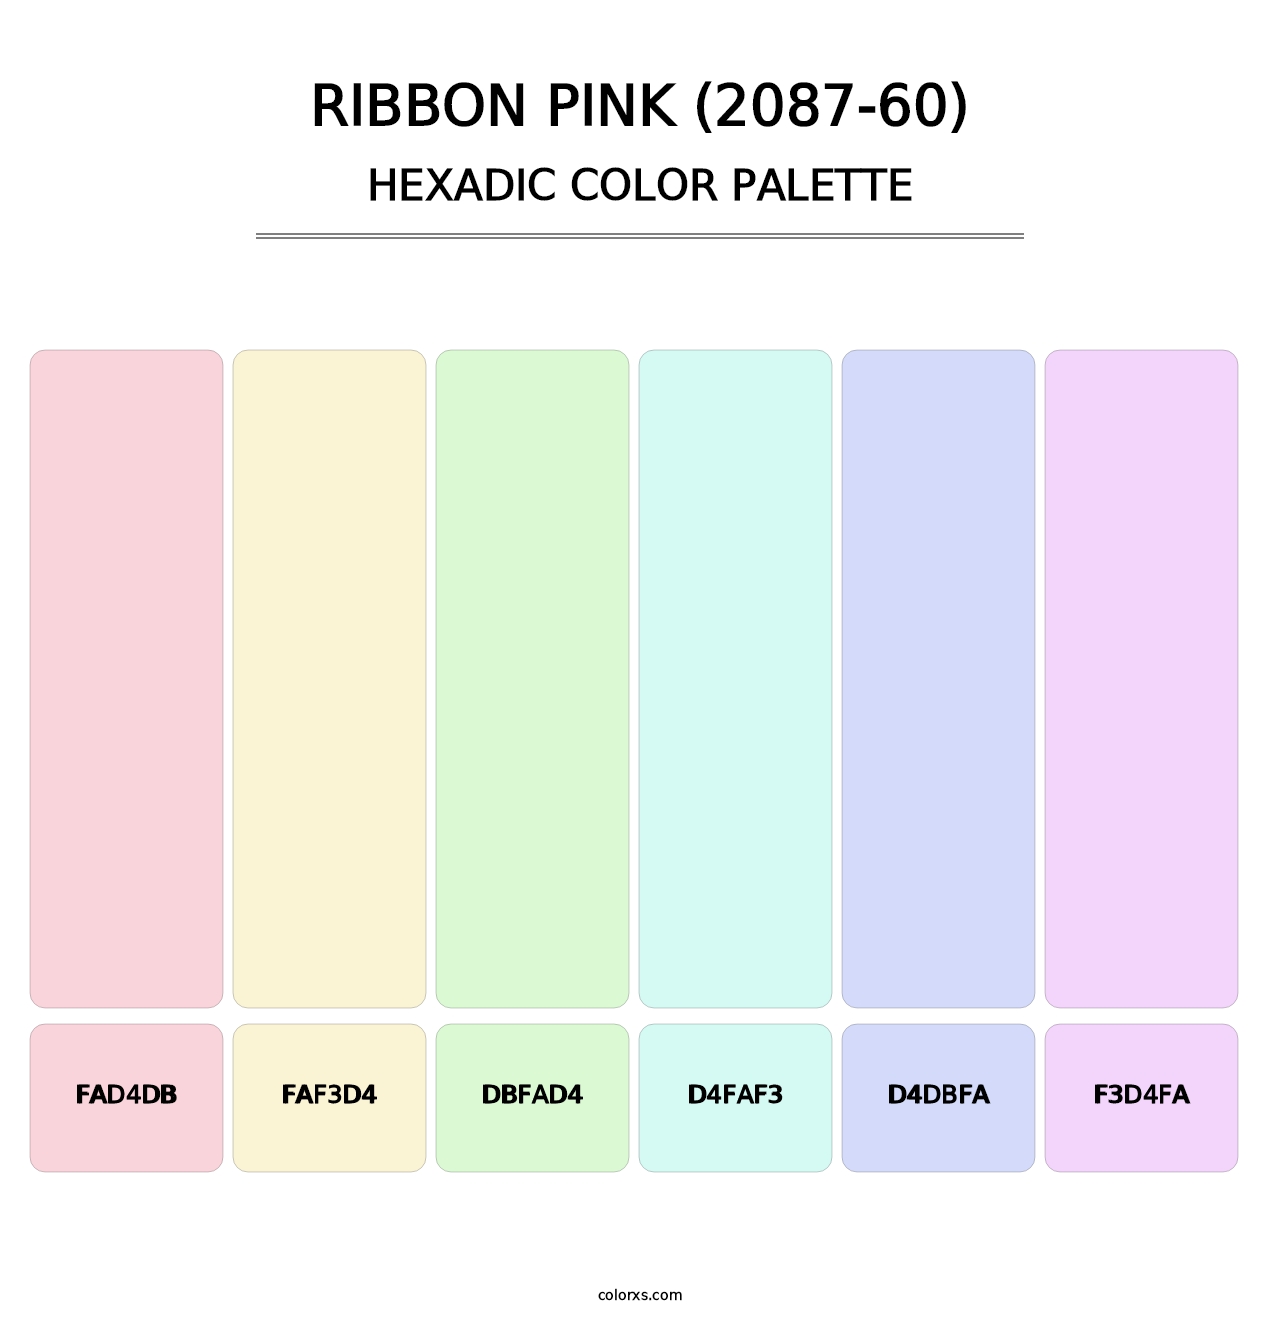 Ribbon Pink (2087-60) - Hexadic Color Palette